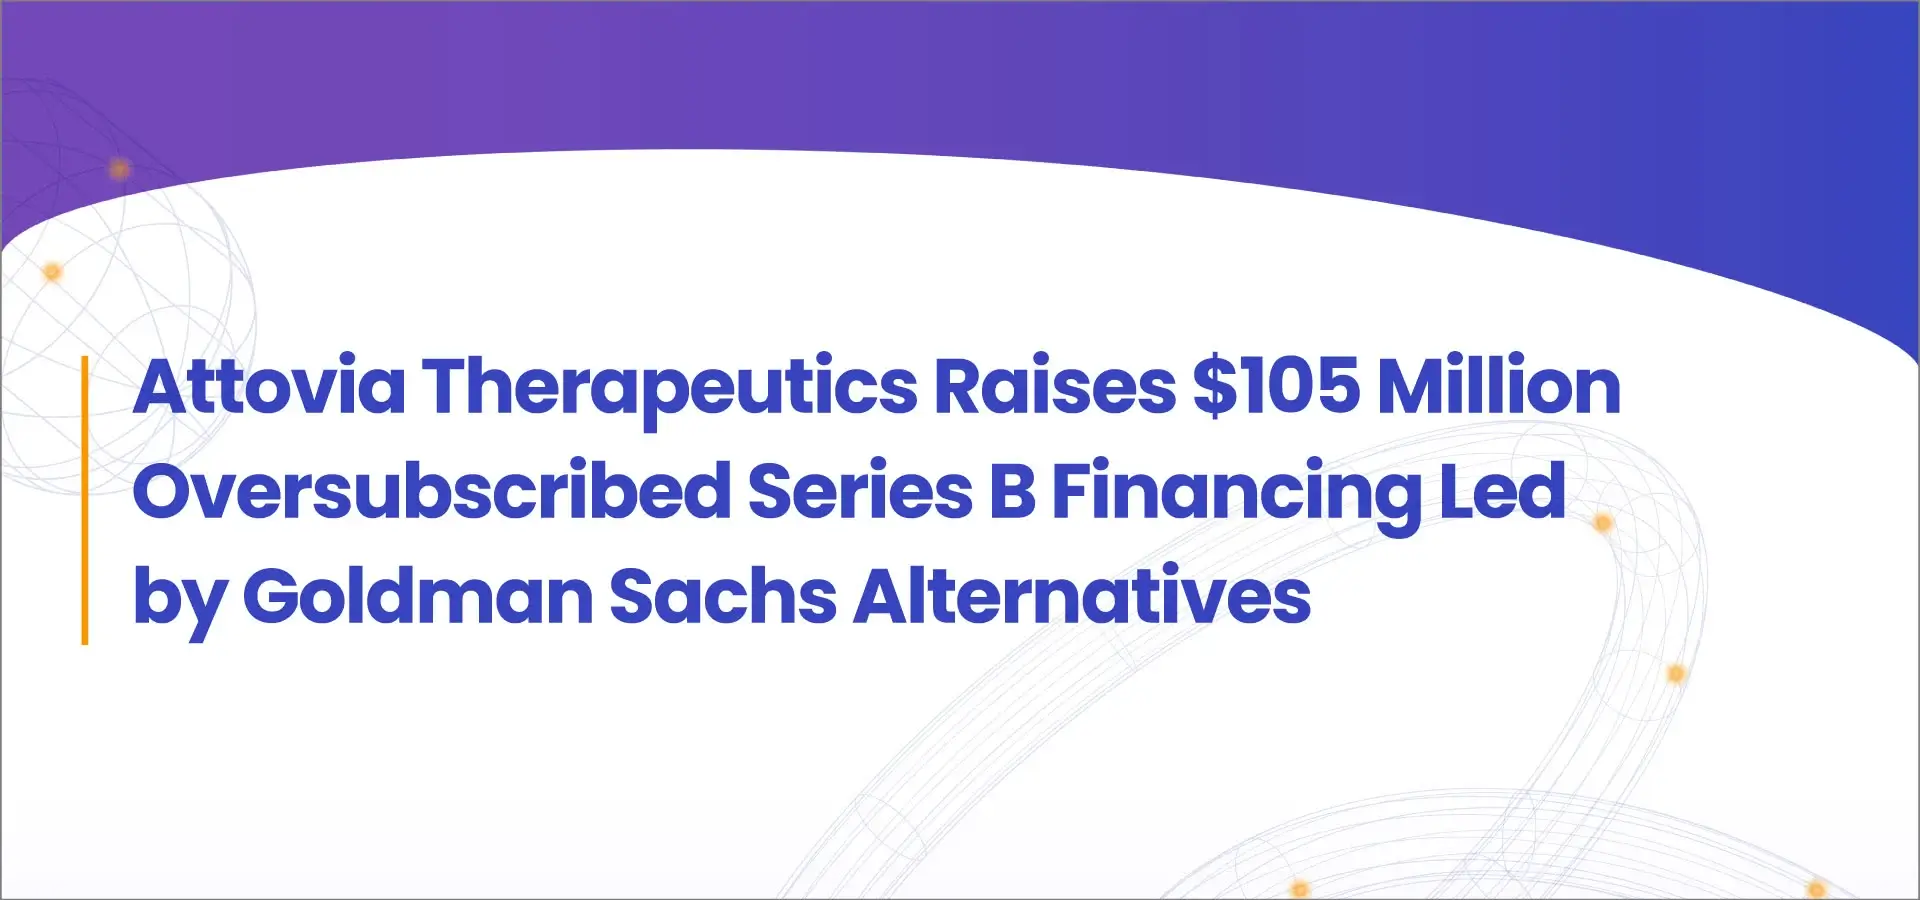 Attovia Therapeutics Raises $105 Million Oversubscribed Series B Financing Led by Goldman Sachs Alternatives